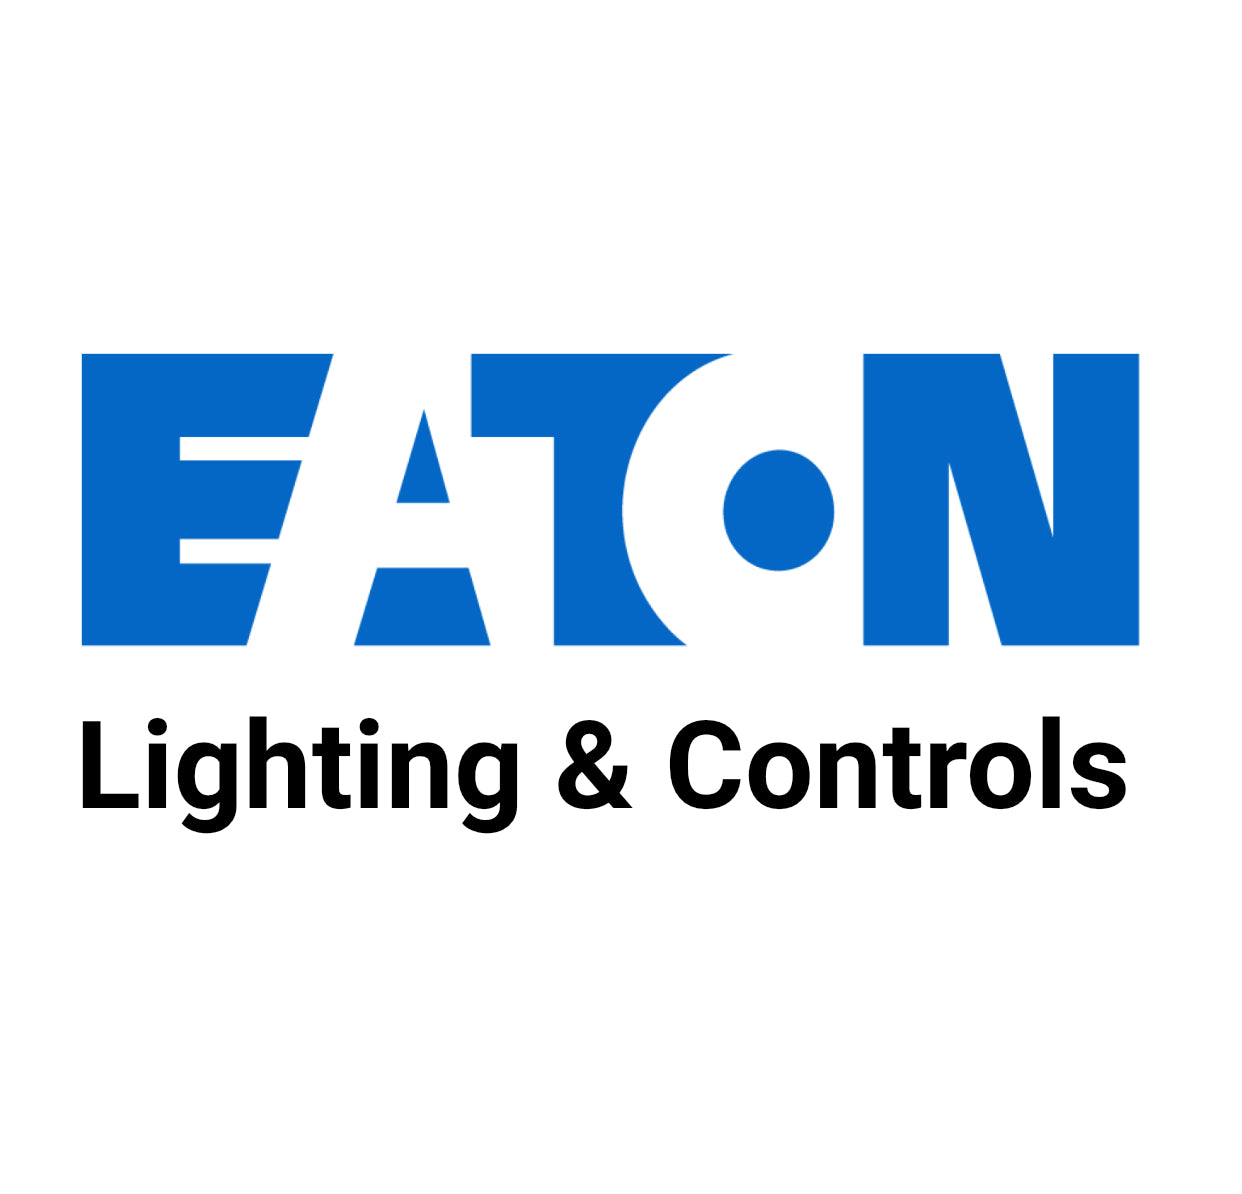 EATON LIGHTING & CONTROLS